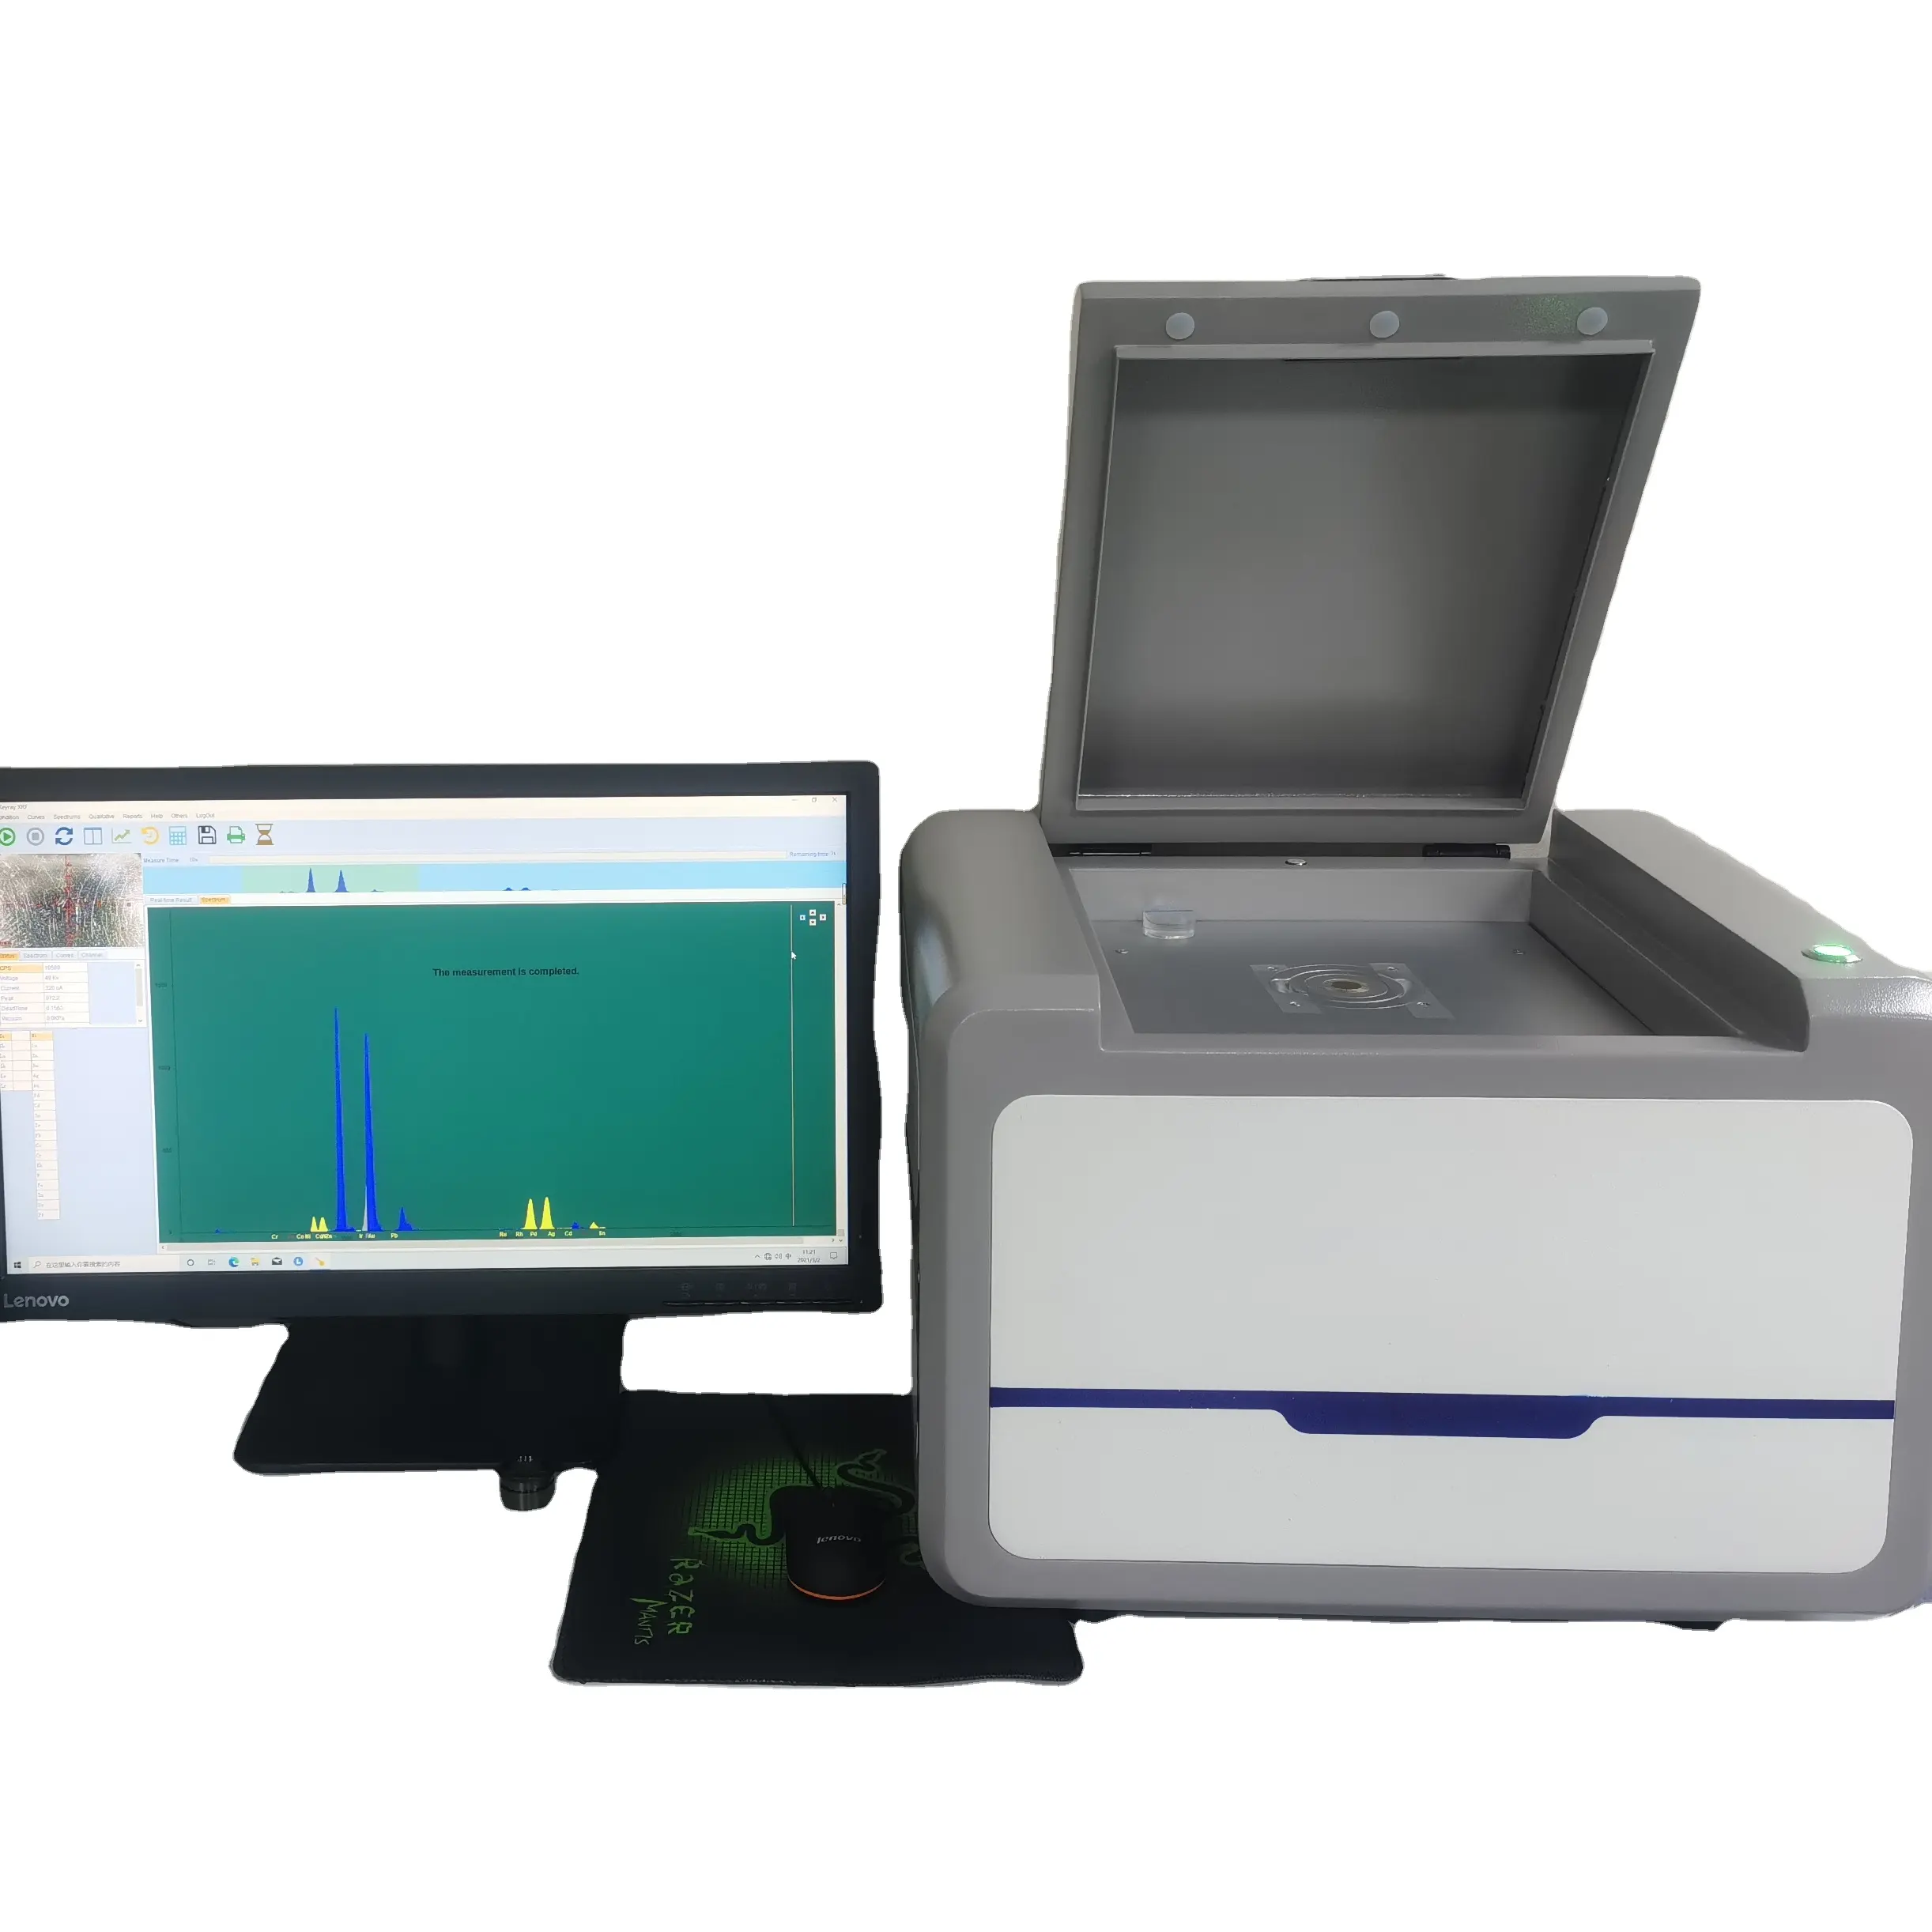 Analizador XRF de Metal dorado para escritorio, espectómetro de rayos X para pruebas de elementos metálicos múltiples, DX-2800M tipo SDD